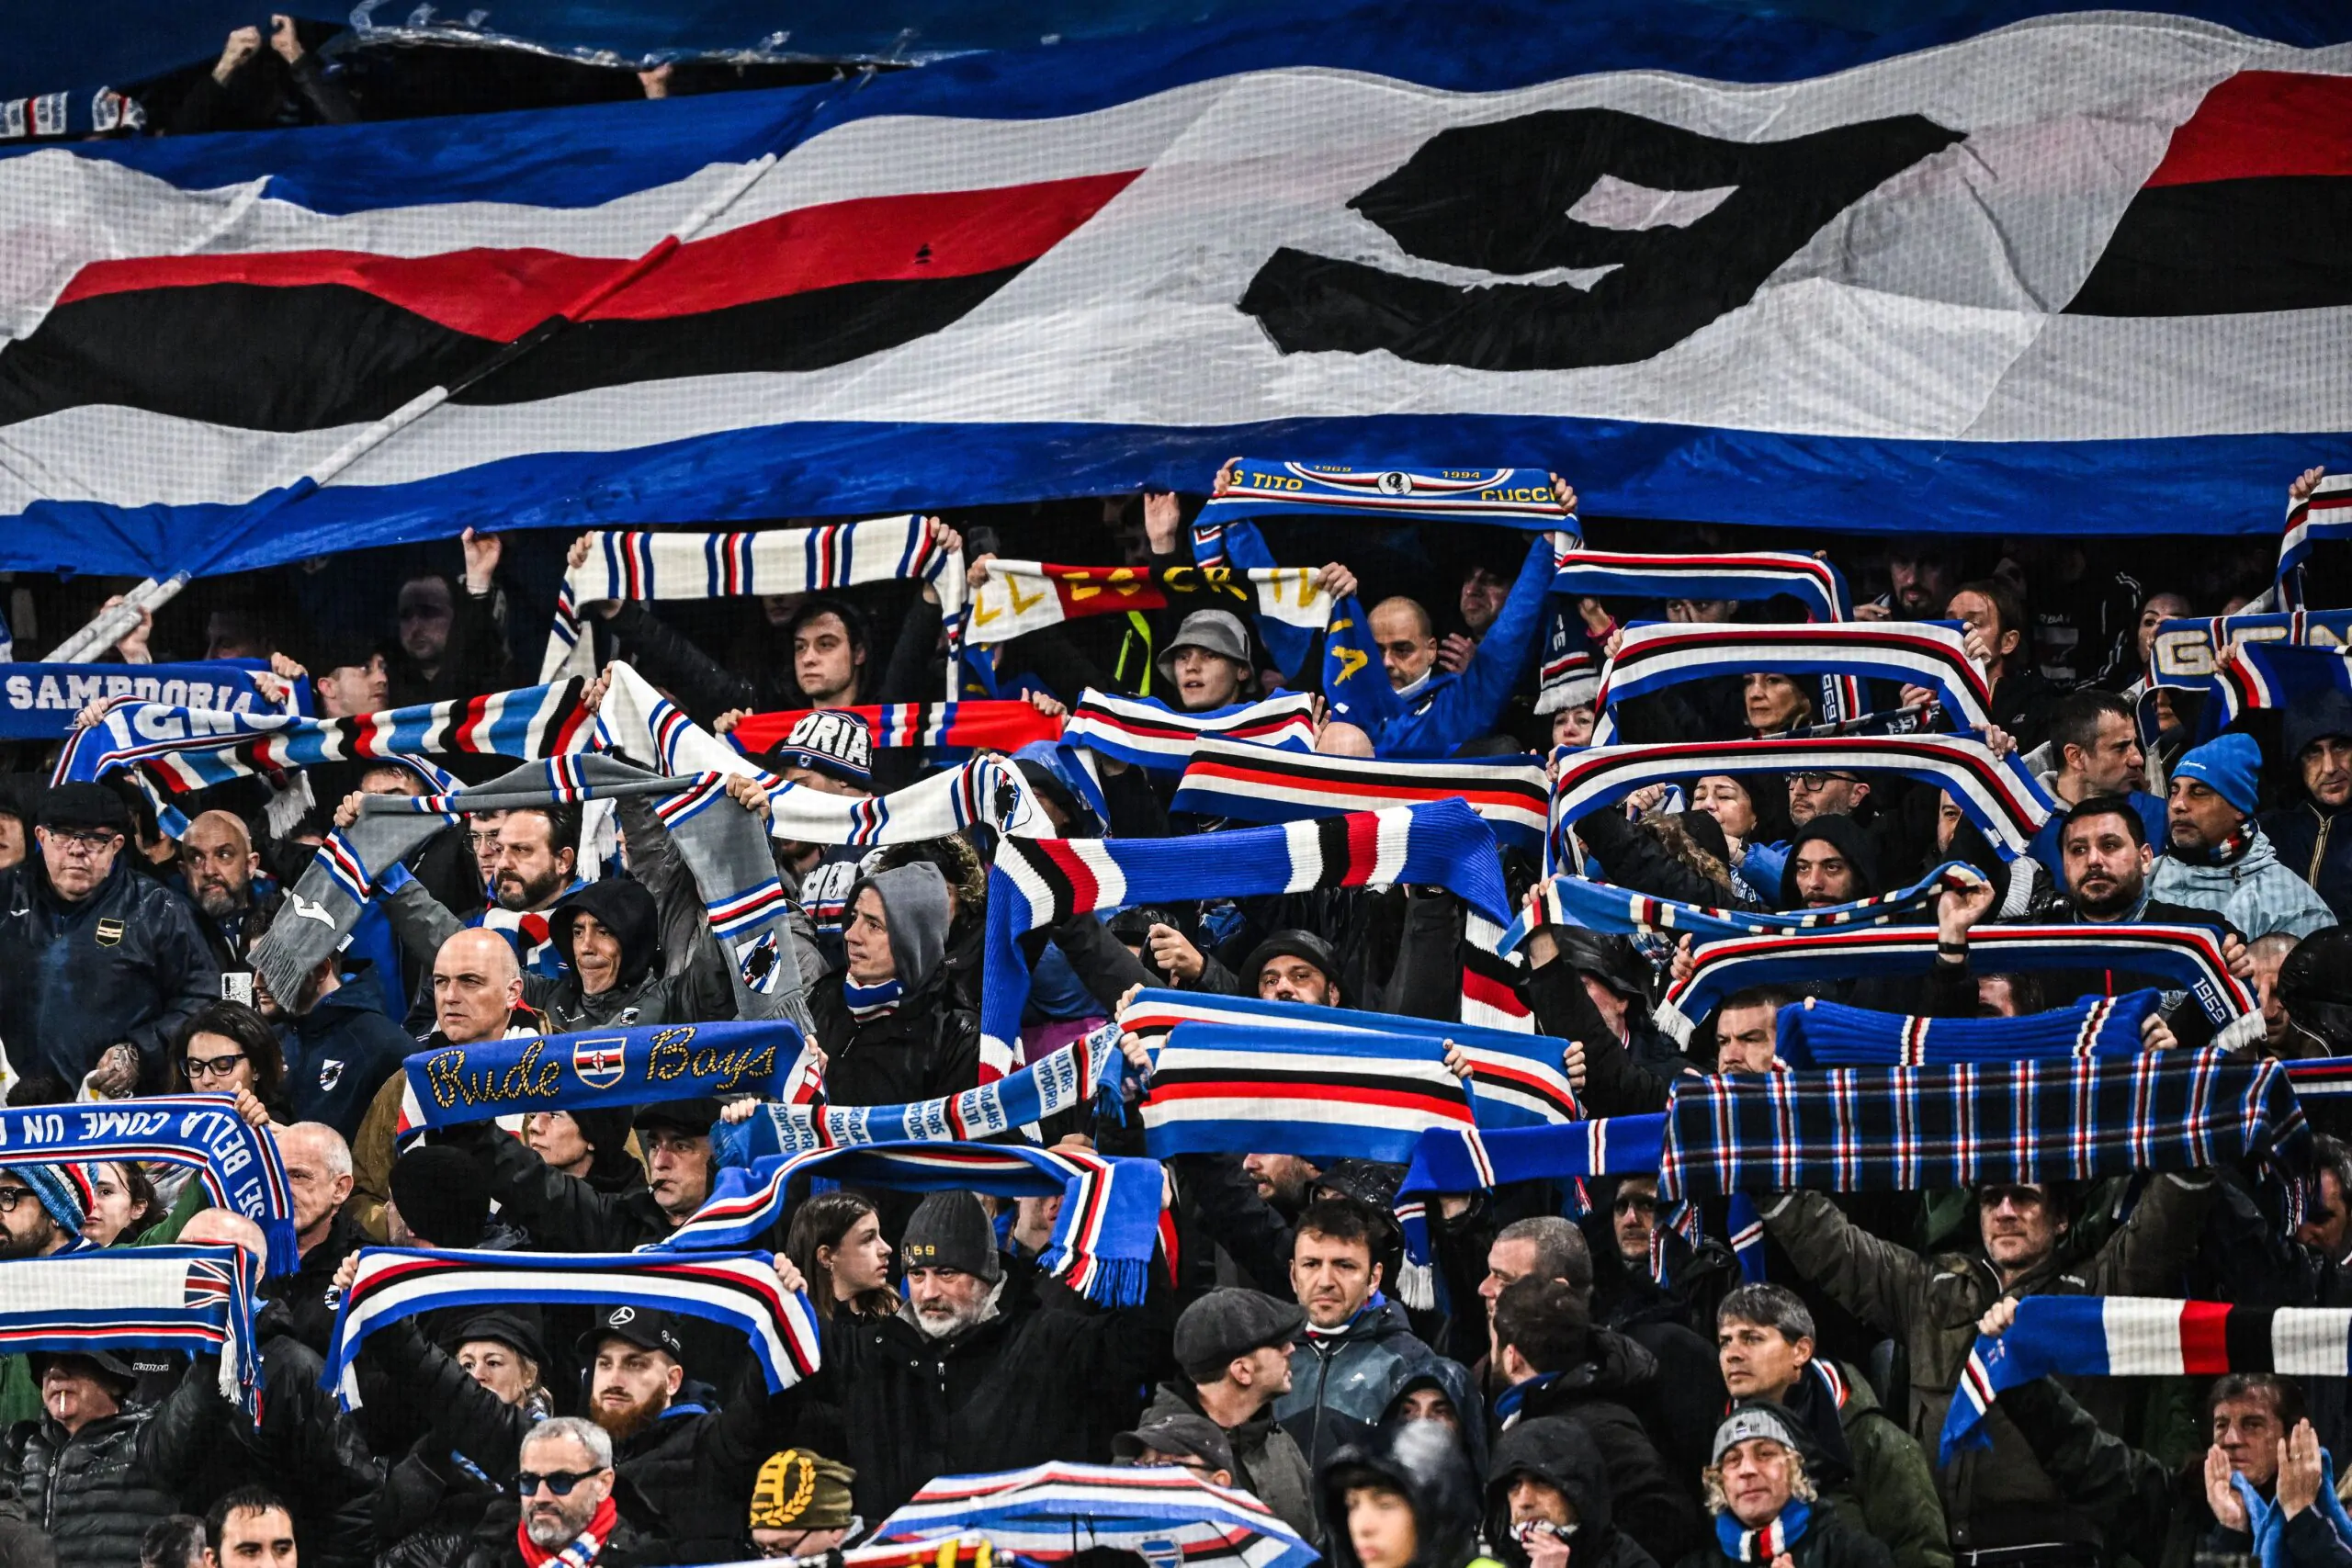 Caos Sampdoria, i tifosi rispondono a Garrone: “Se il club sparirà, voi sarete i primi responsabili”